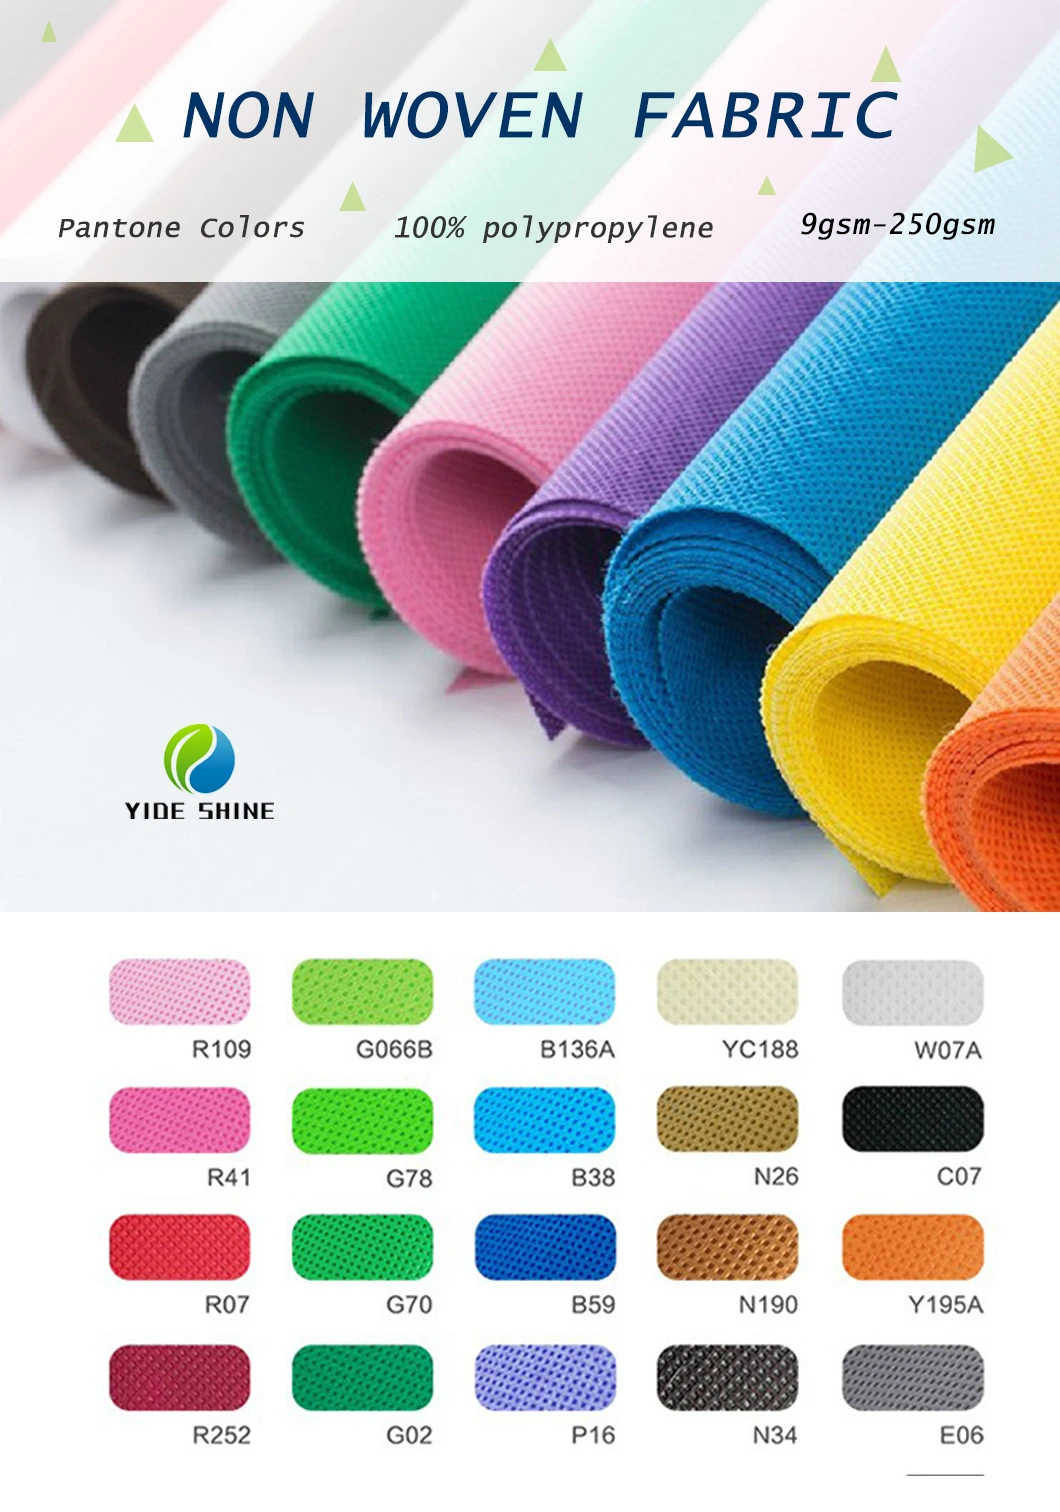 Polypropylene PP Spunbond Nonwoven Fabric